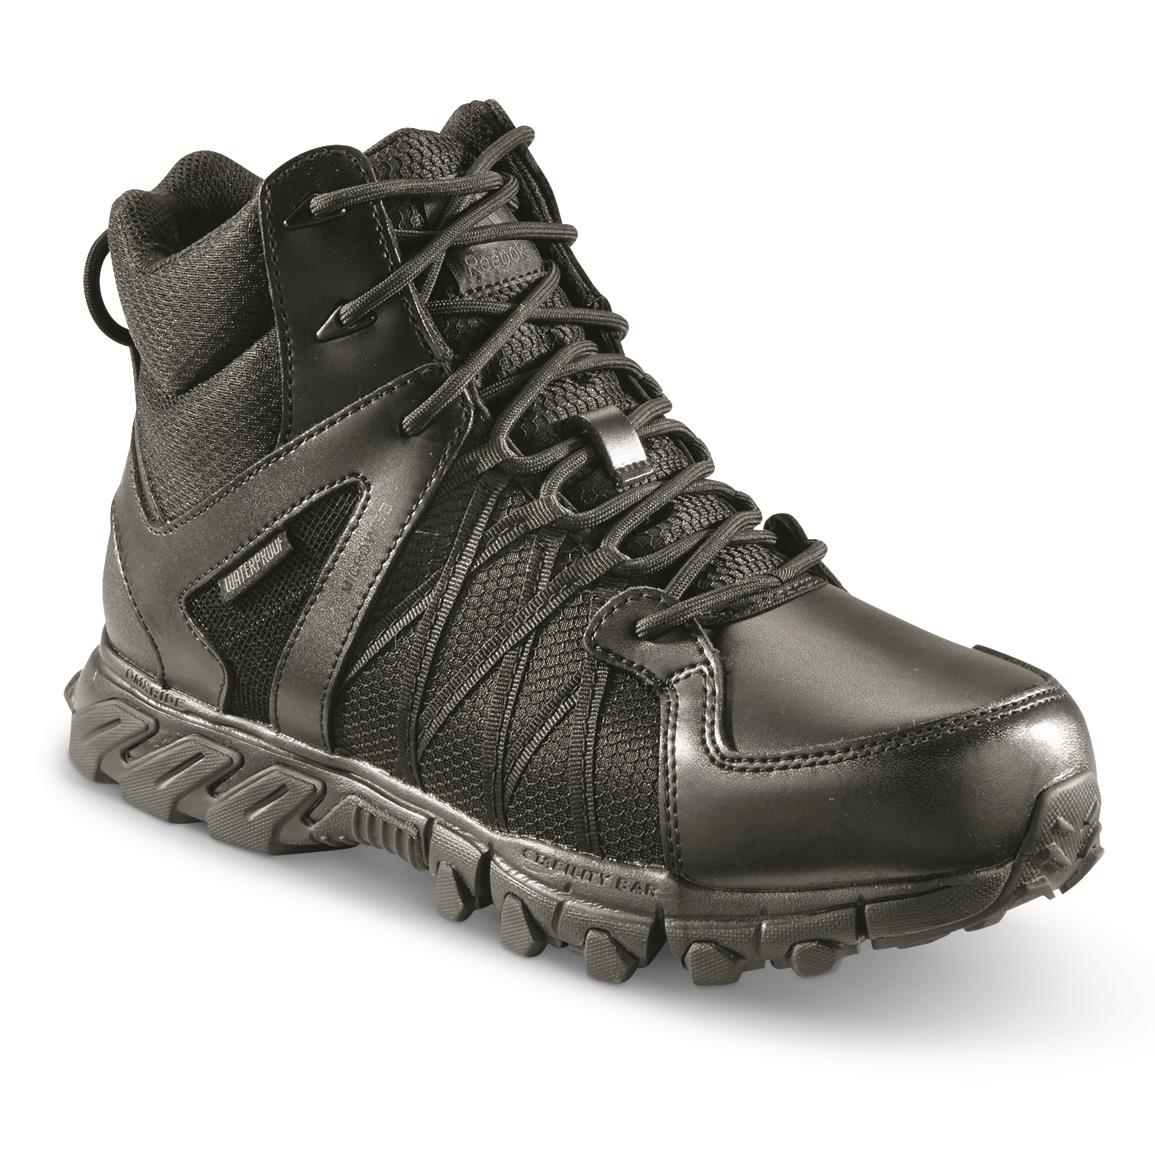 Reebok Men's Trailgrip 6" Side-zip Waterproof Tactical Boots, Black